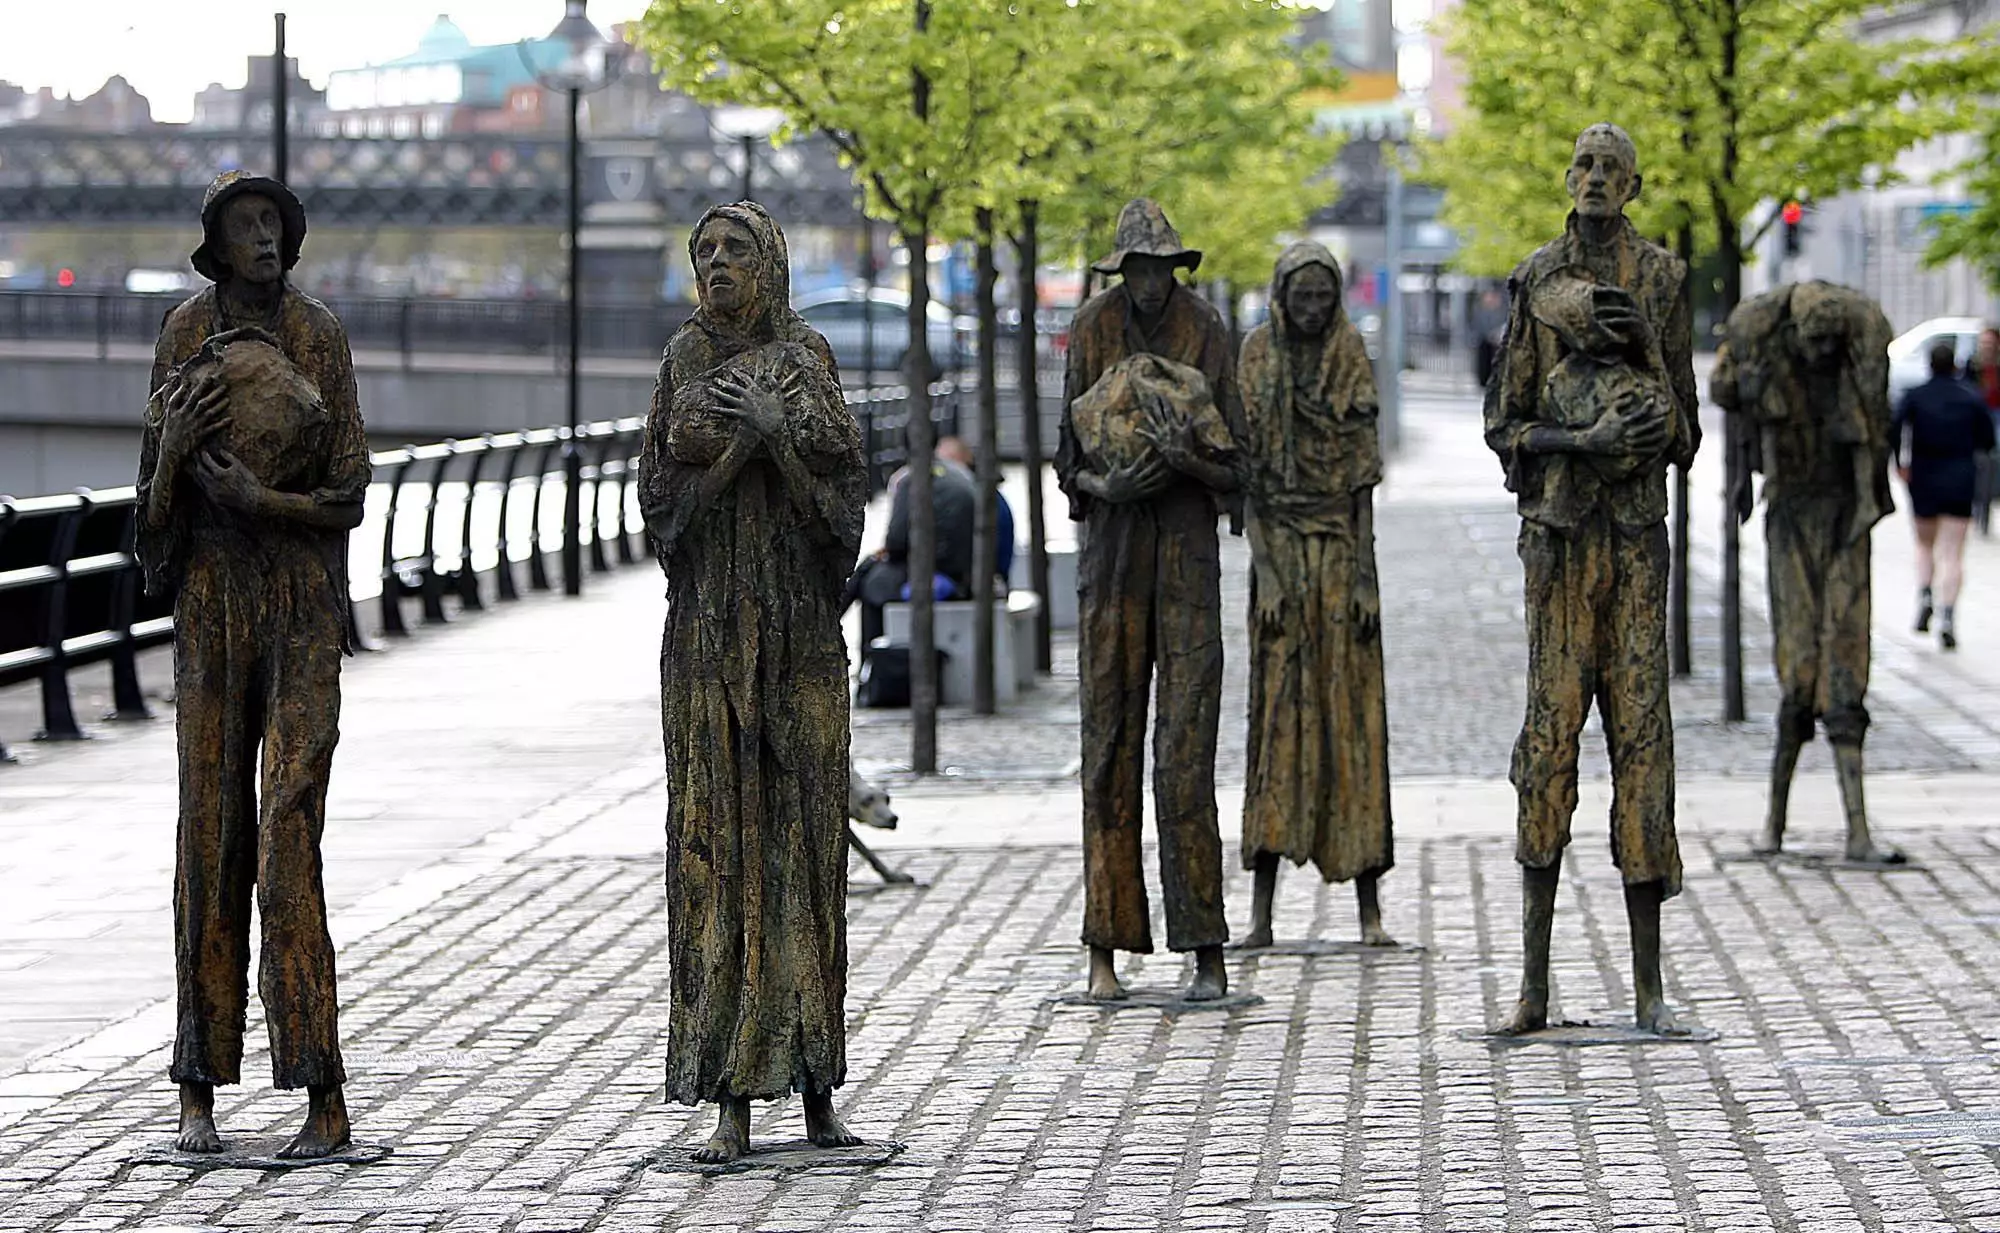 A memorial for victims of the Irish Famine in Dublin.